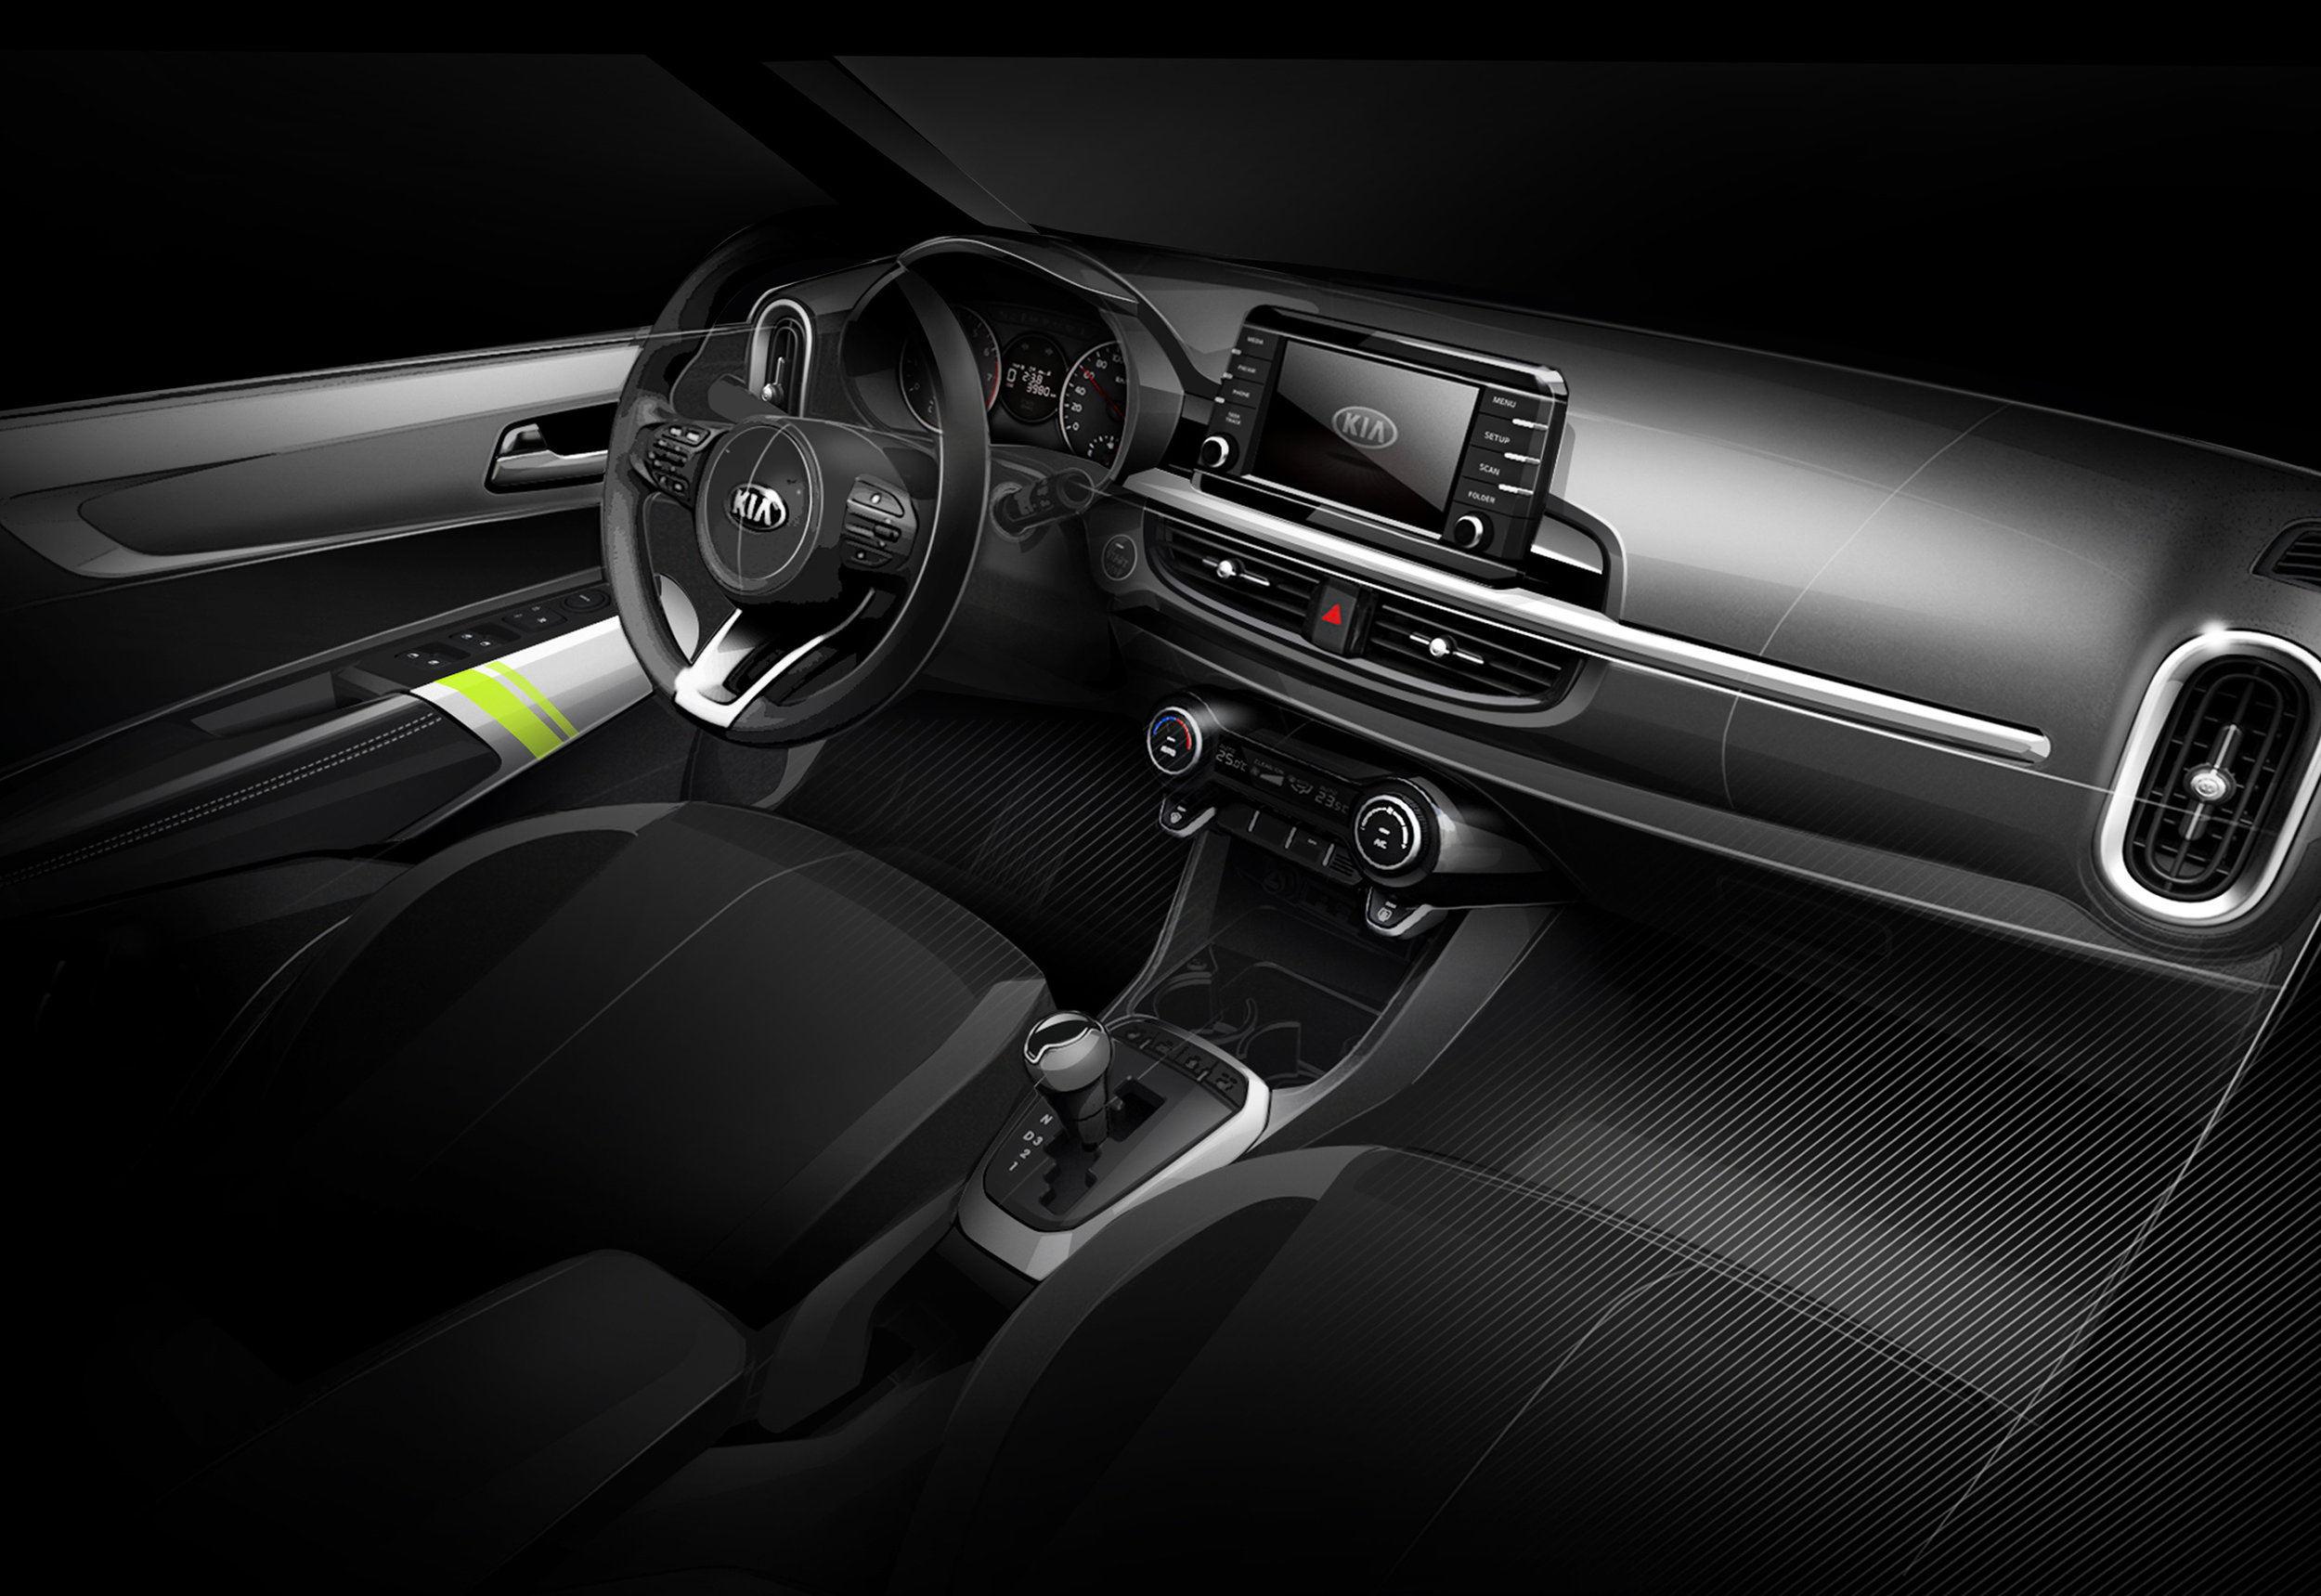 3rd-generation-Picanto-interior-rendering.jpg